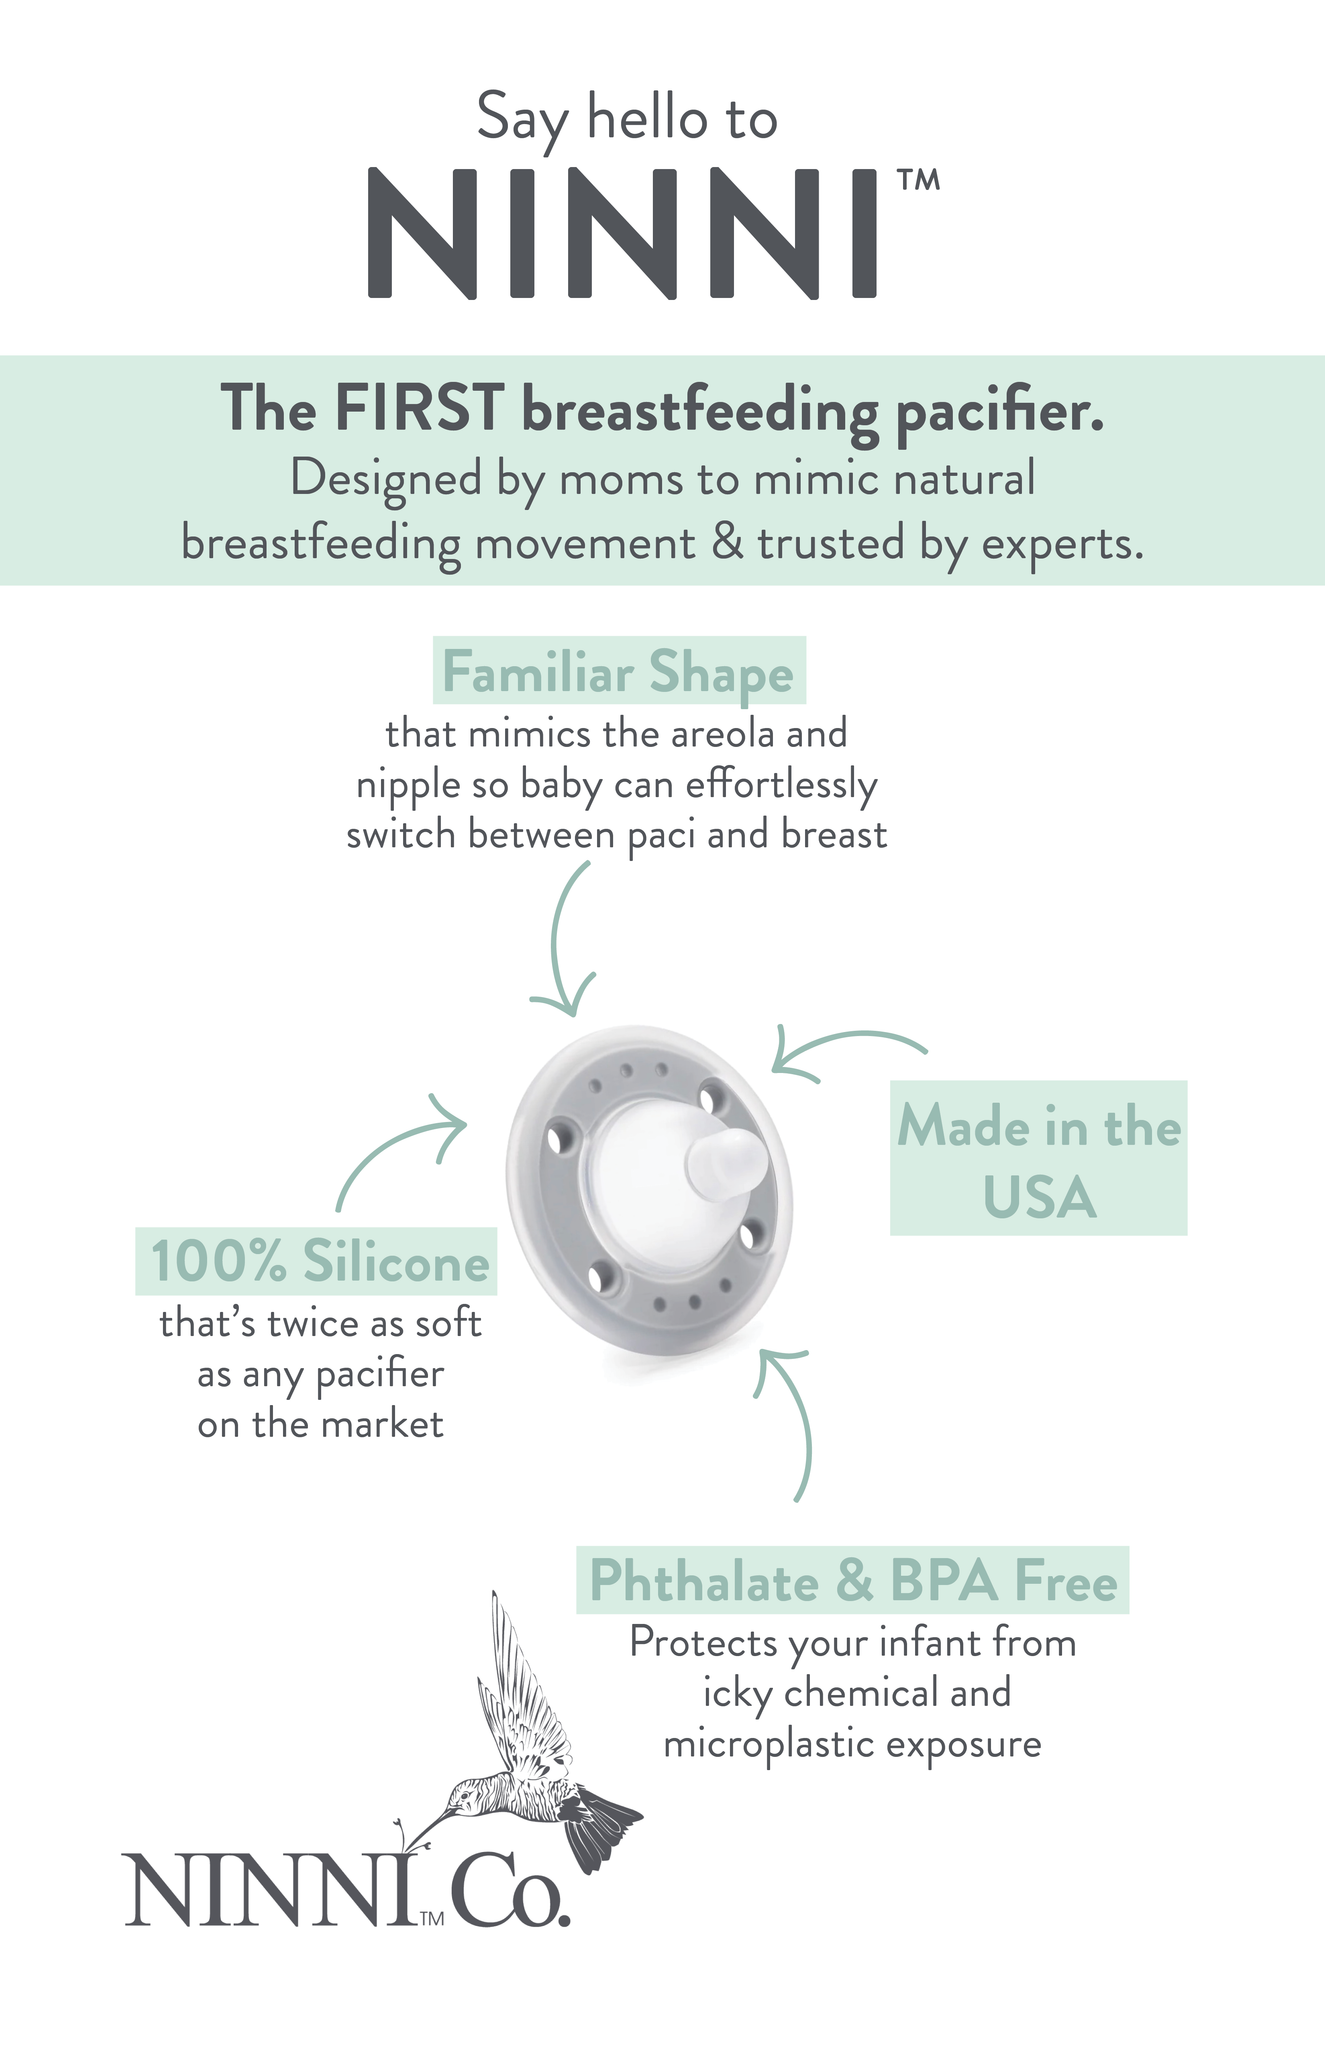 Nini breastfeeding pacifier features